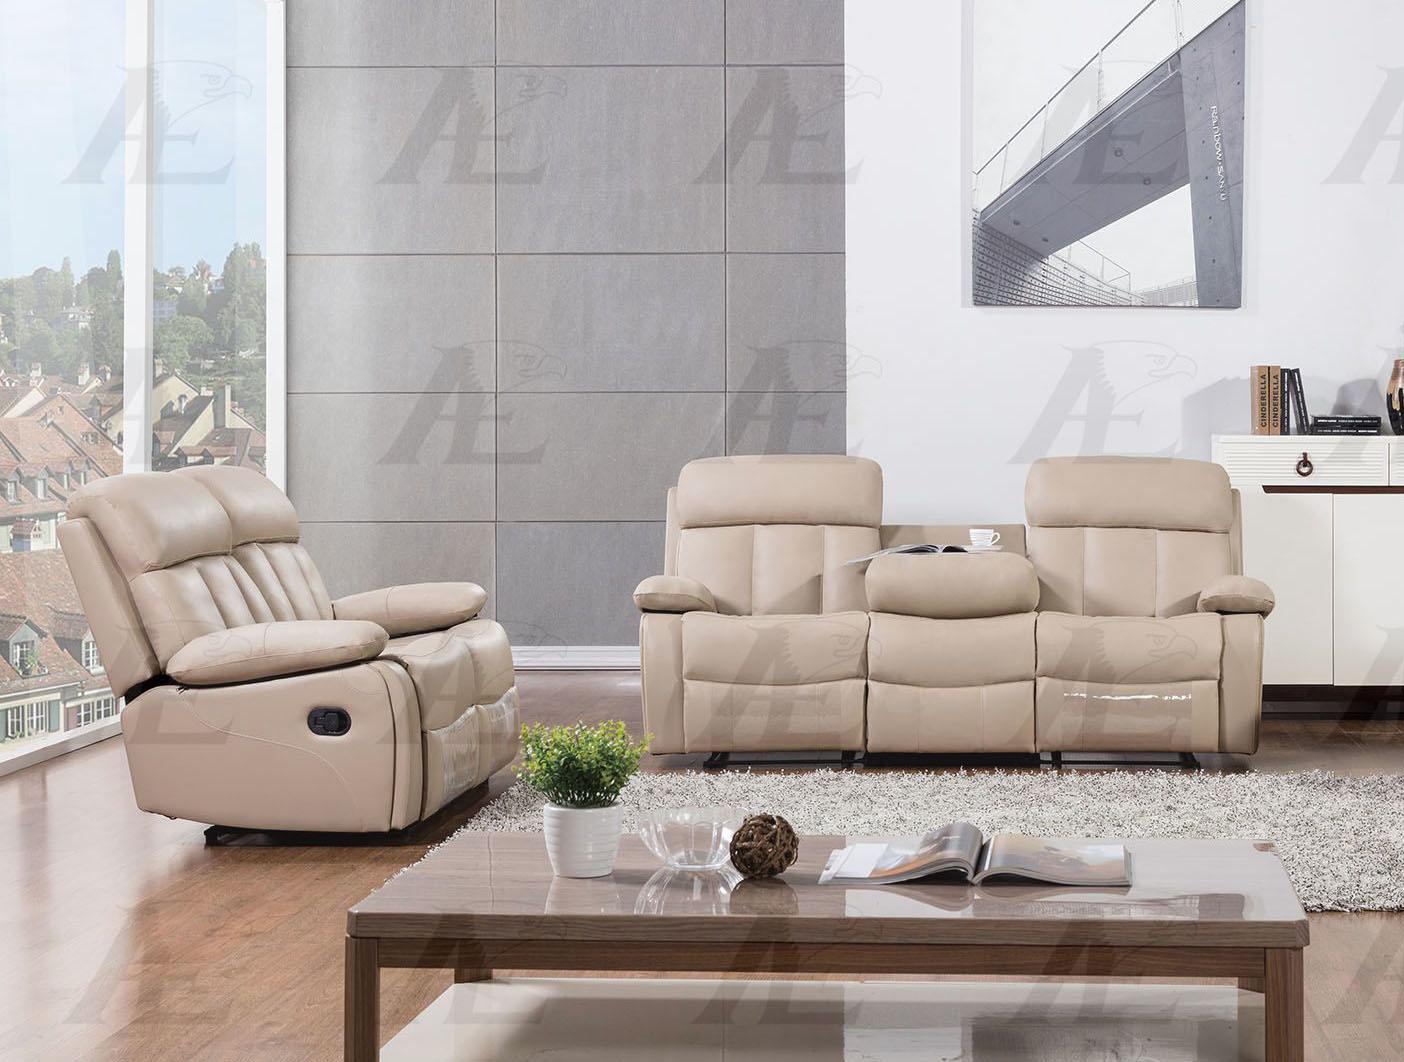 

    
American Eagle Furniture AE-D825-TAN  Recliner Sofa  Loveseat Set Bonded Leather 2Pcs Modern
